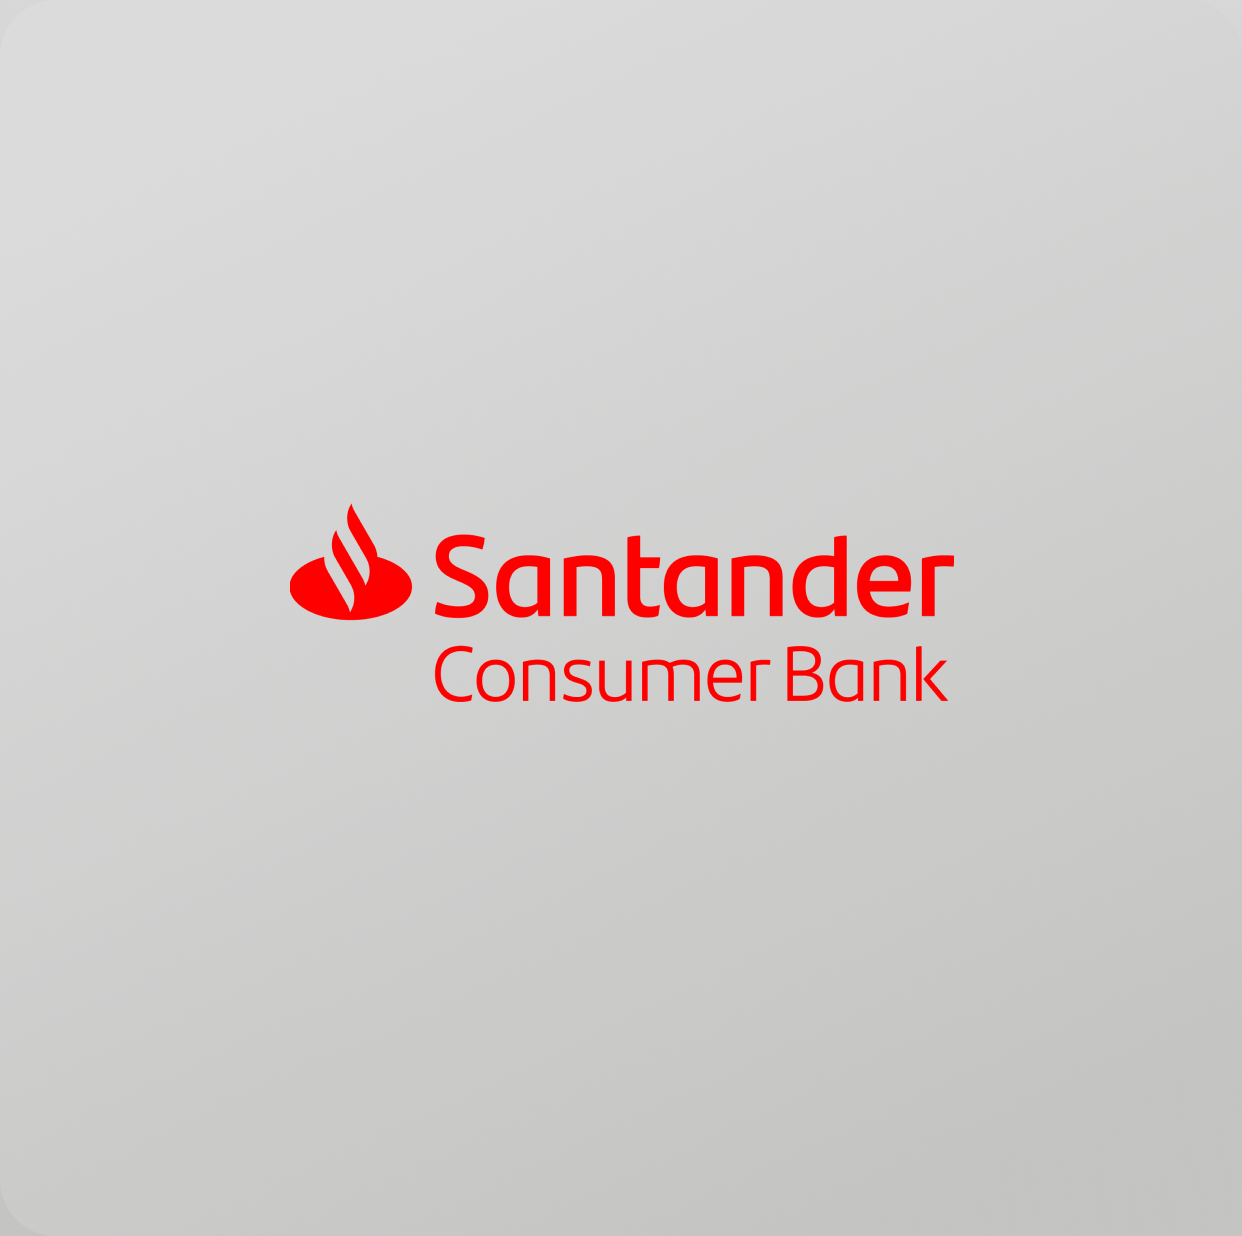 Santander bank energi lån til solceller med 1komma5